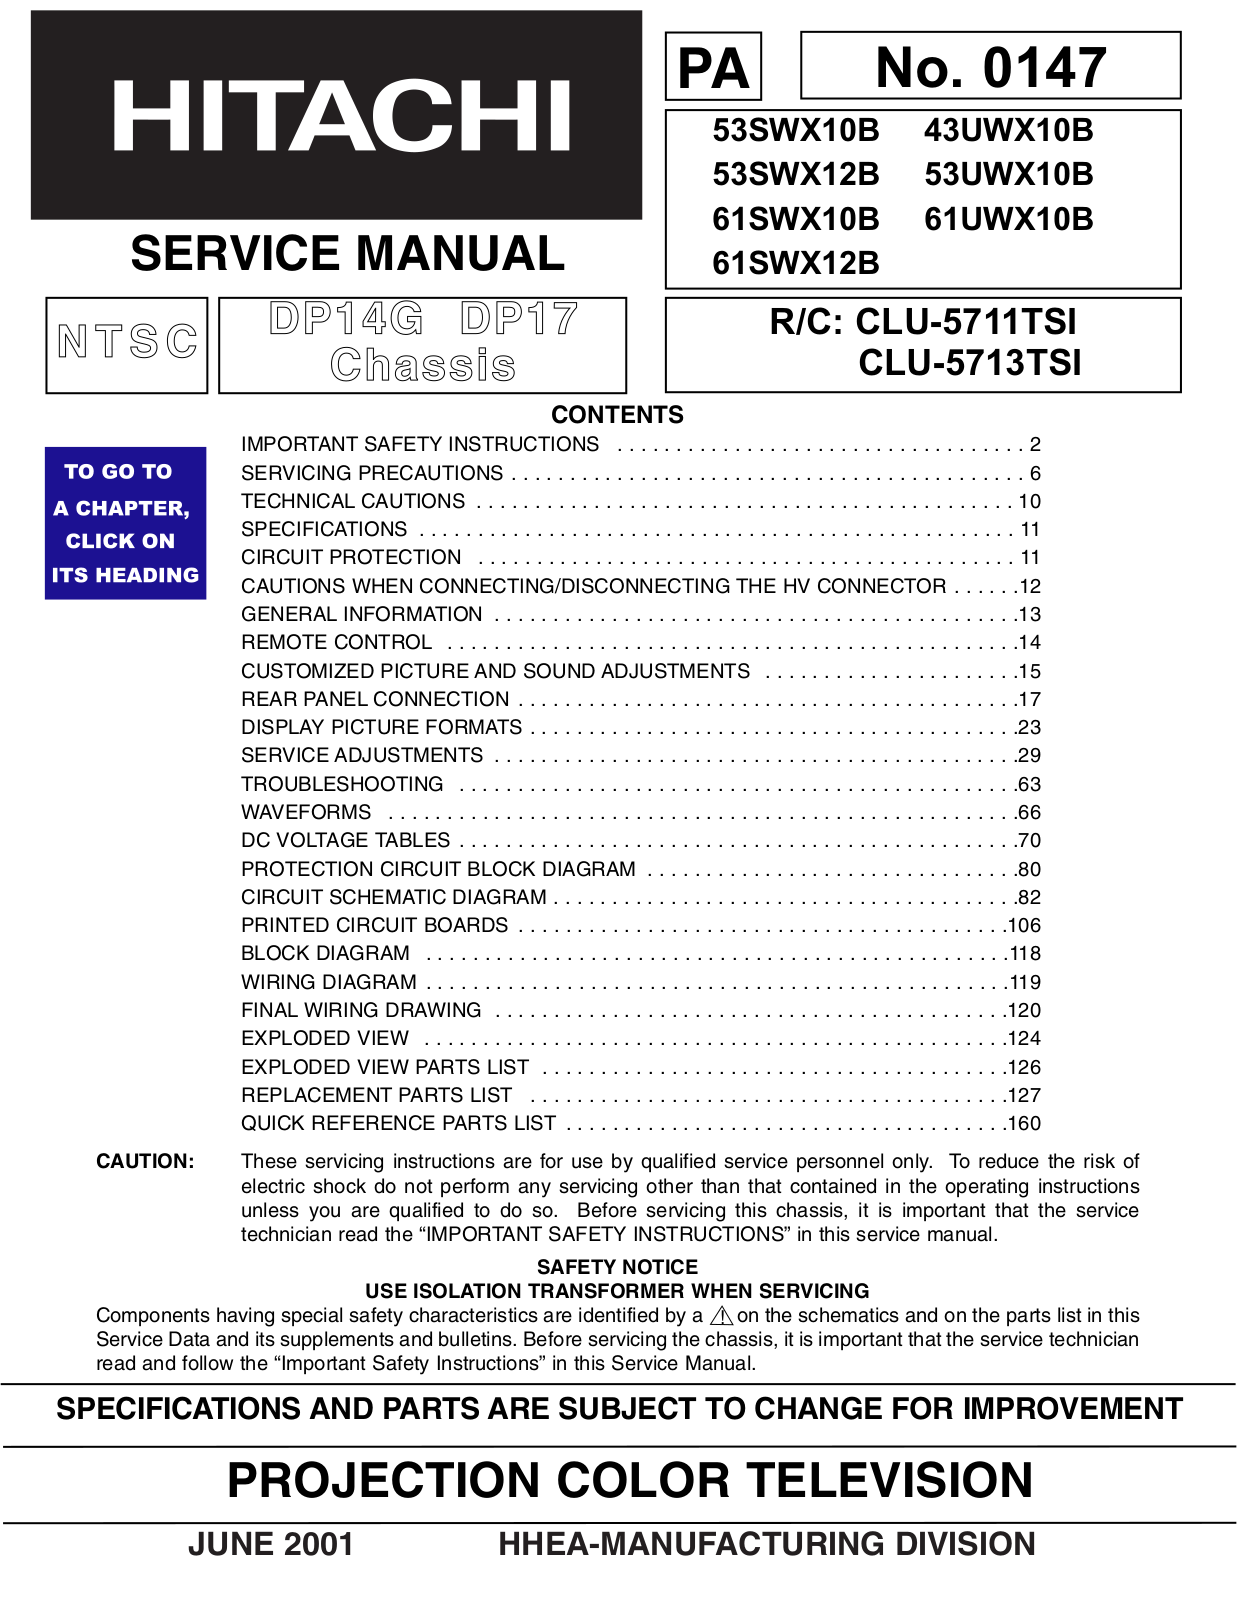 Hitachi 43-53-61-S-U-WX10B-12B Service Manual